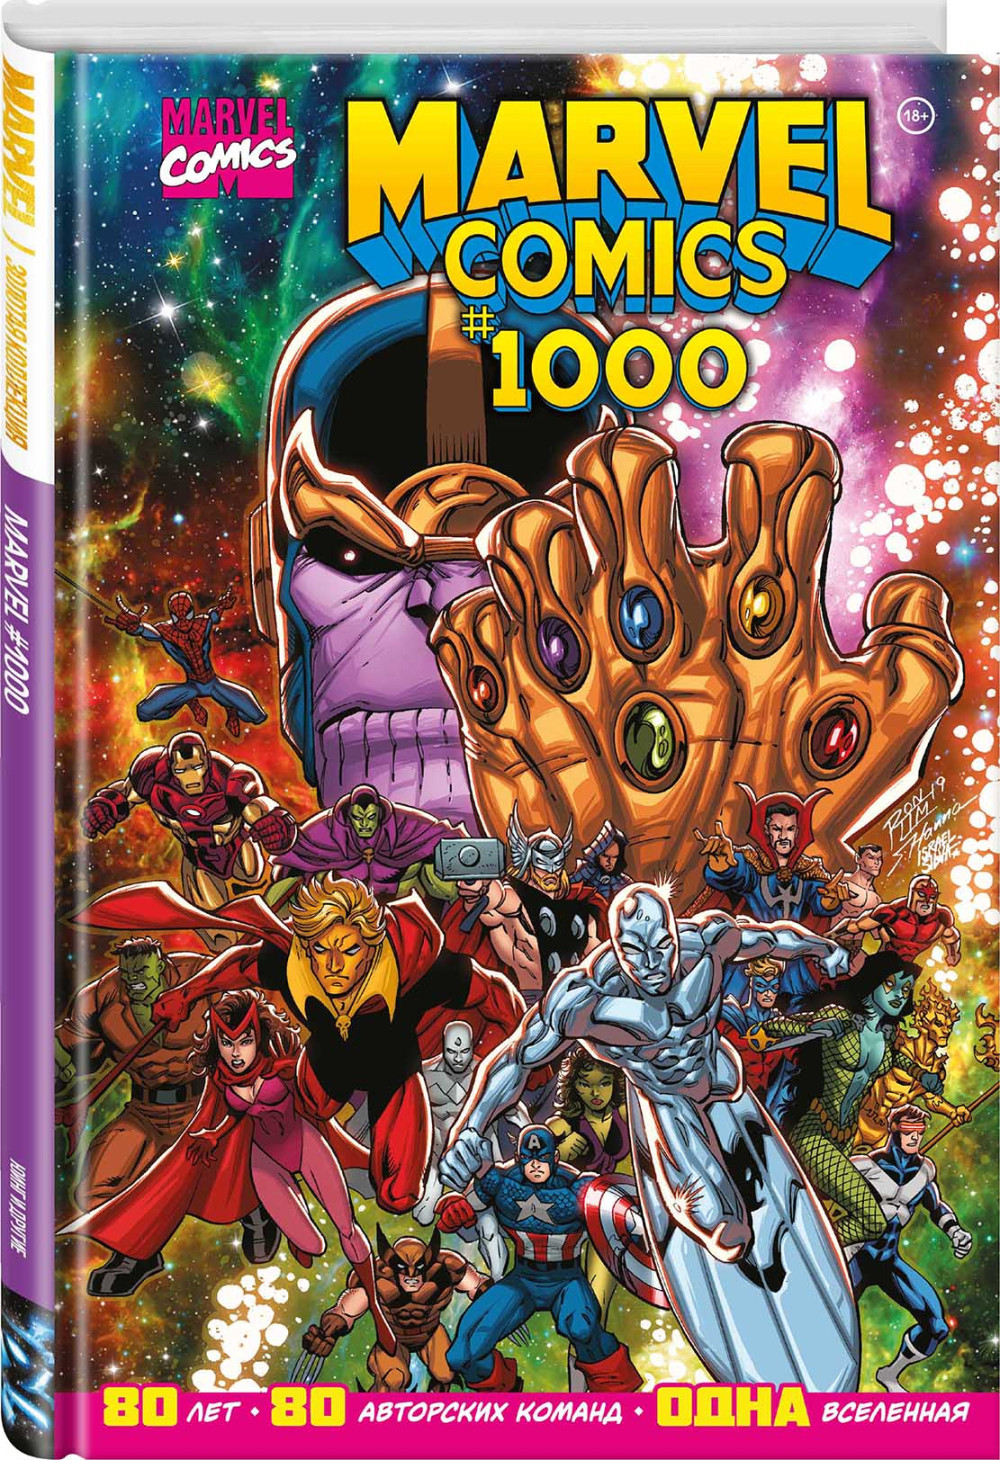   Marvel Comics #1000.   Marvel +  Genshin Impact   